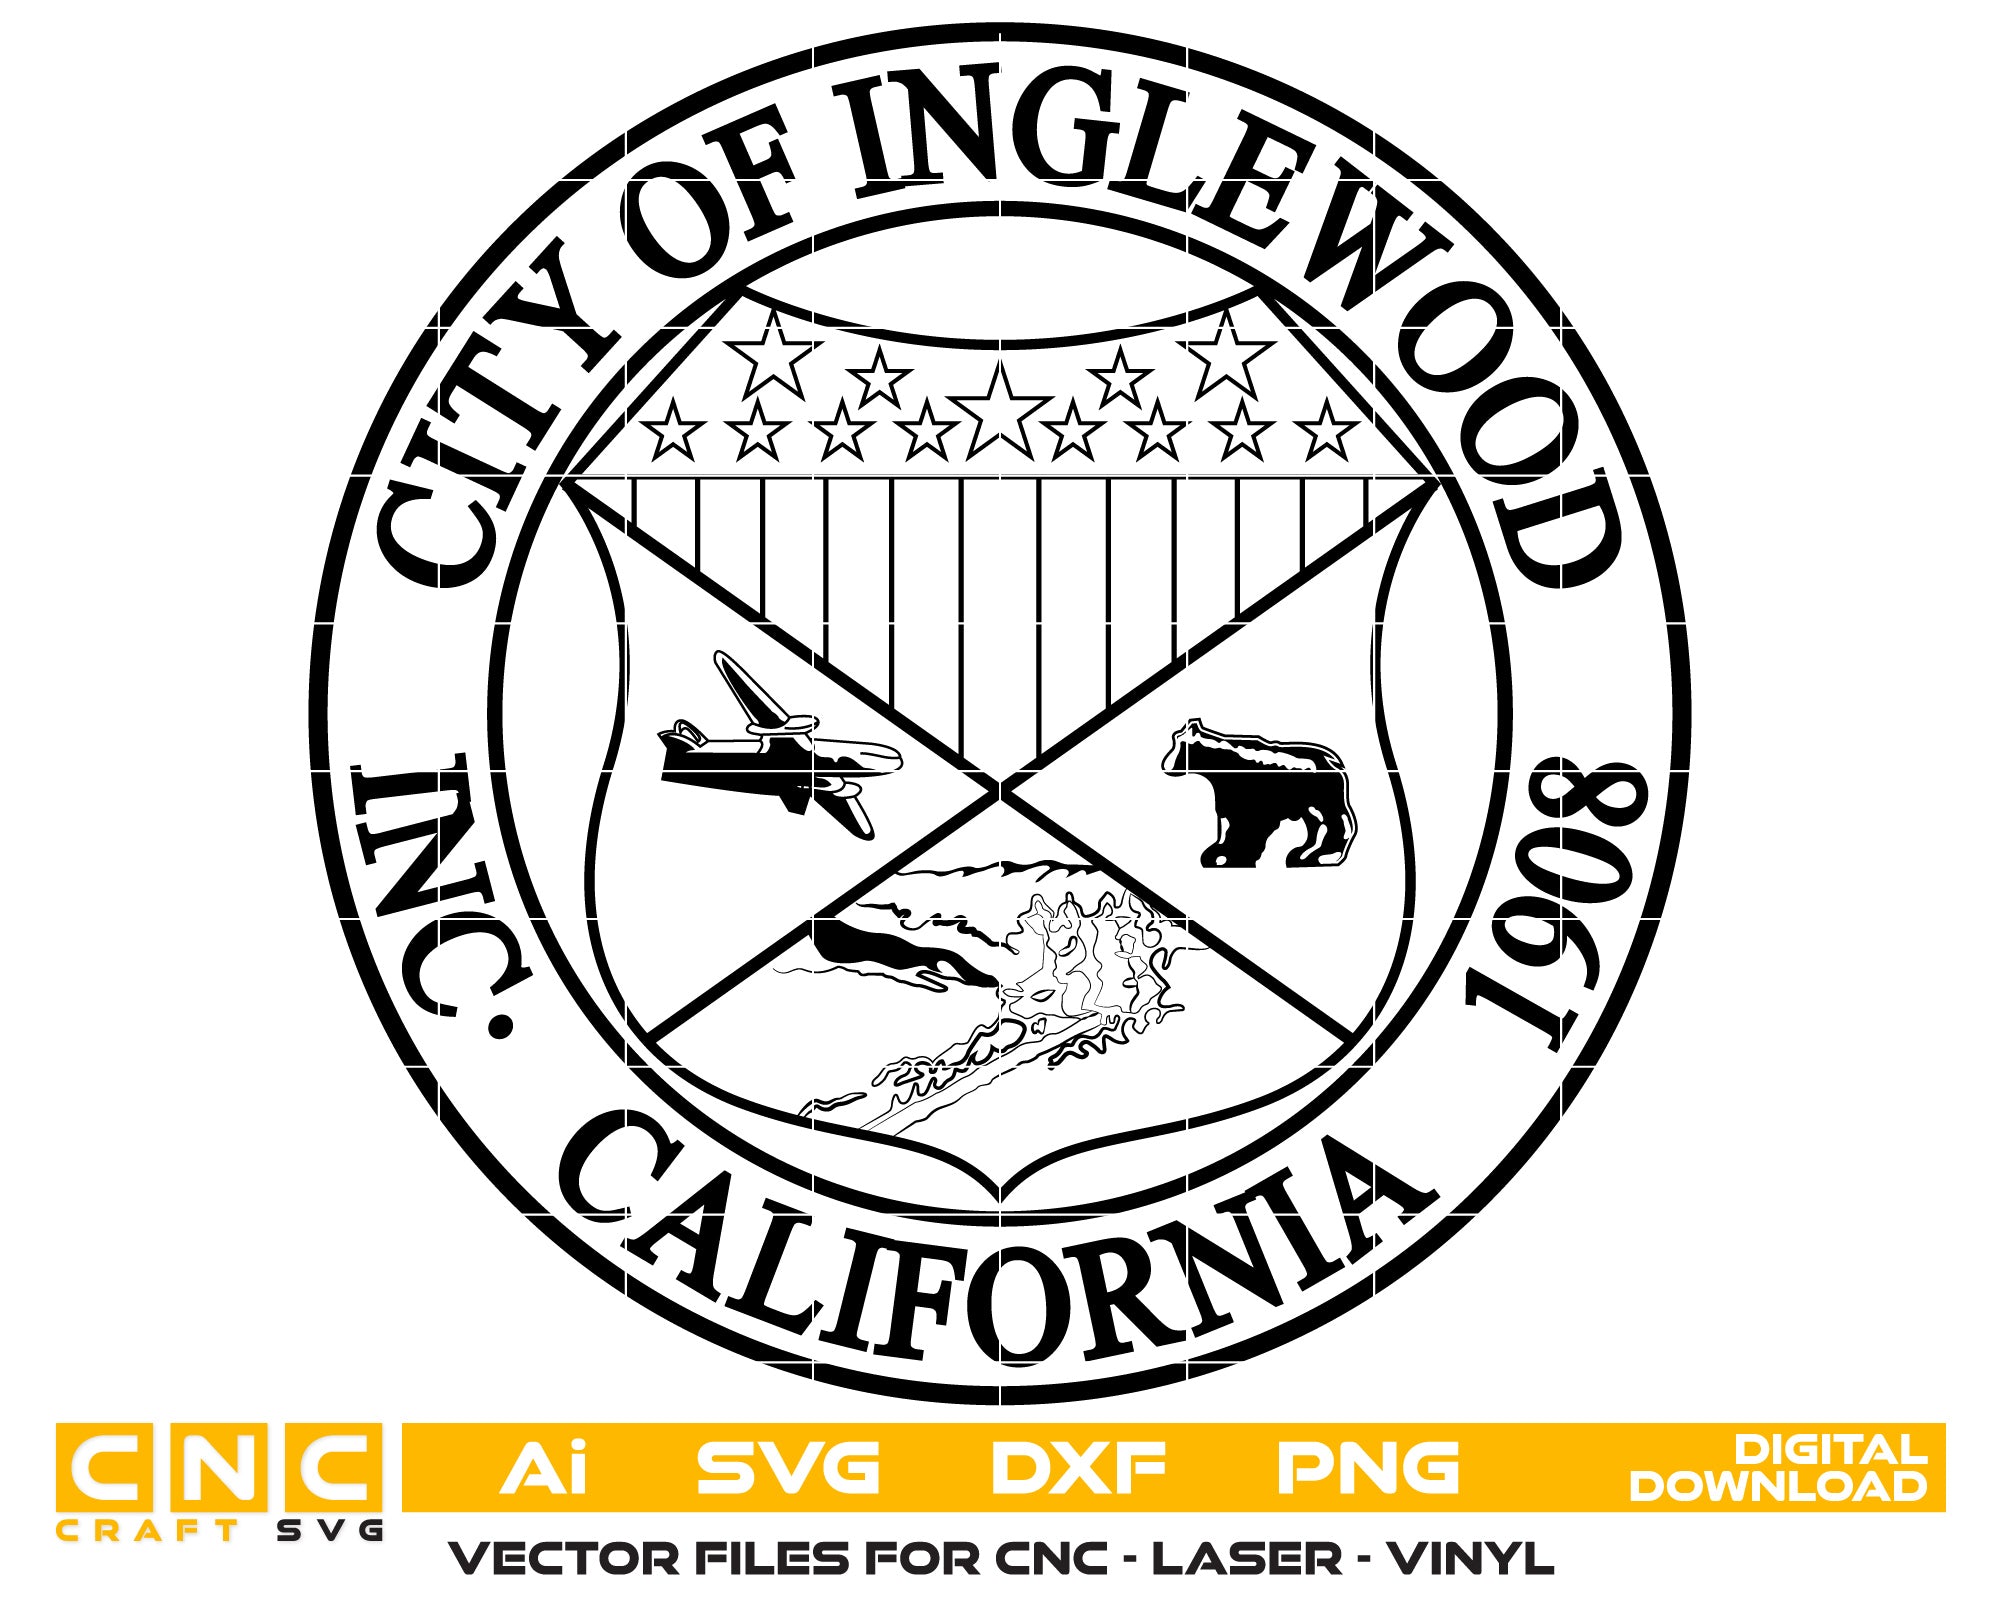 California City of Inglewood Seal vector art